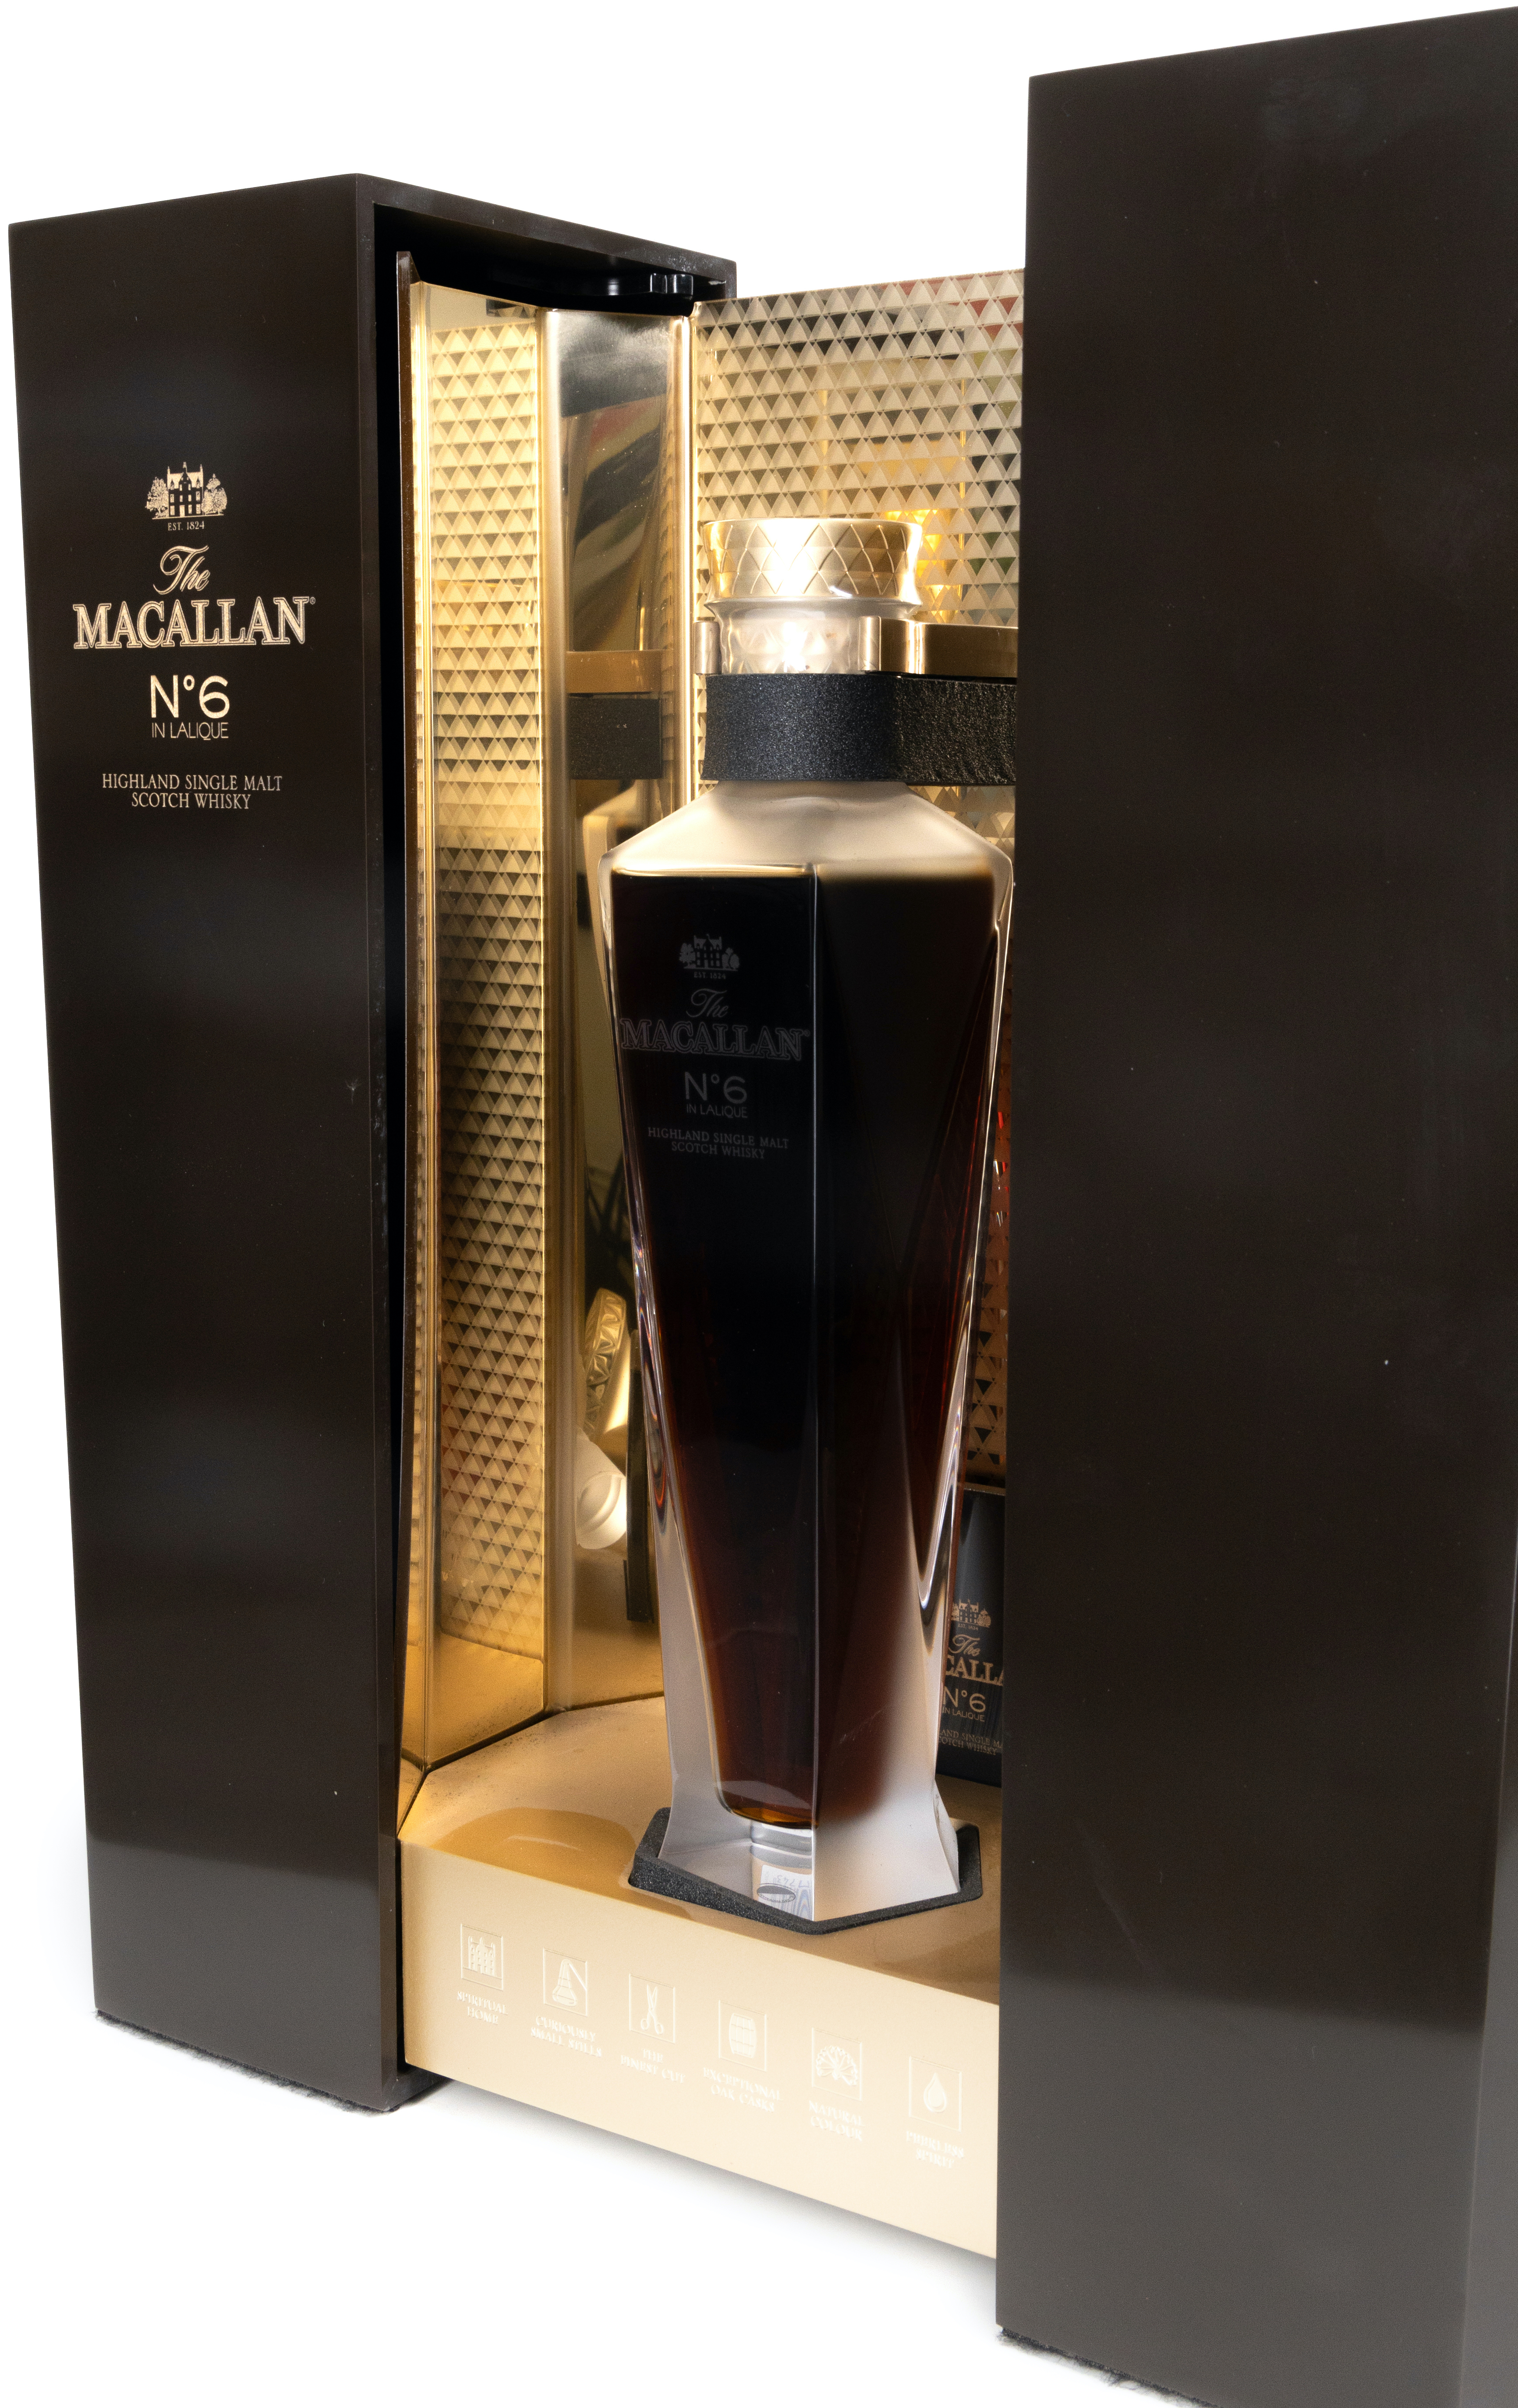 The Macallan No.6 in Lalique Highland Single Malt Scotch Whisky 43% vol. 0,7L